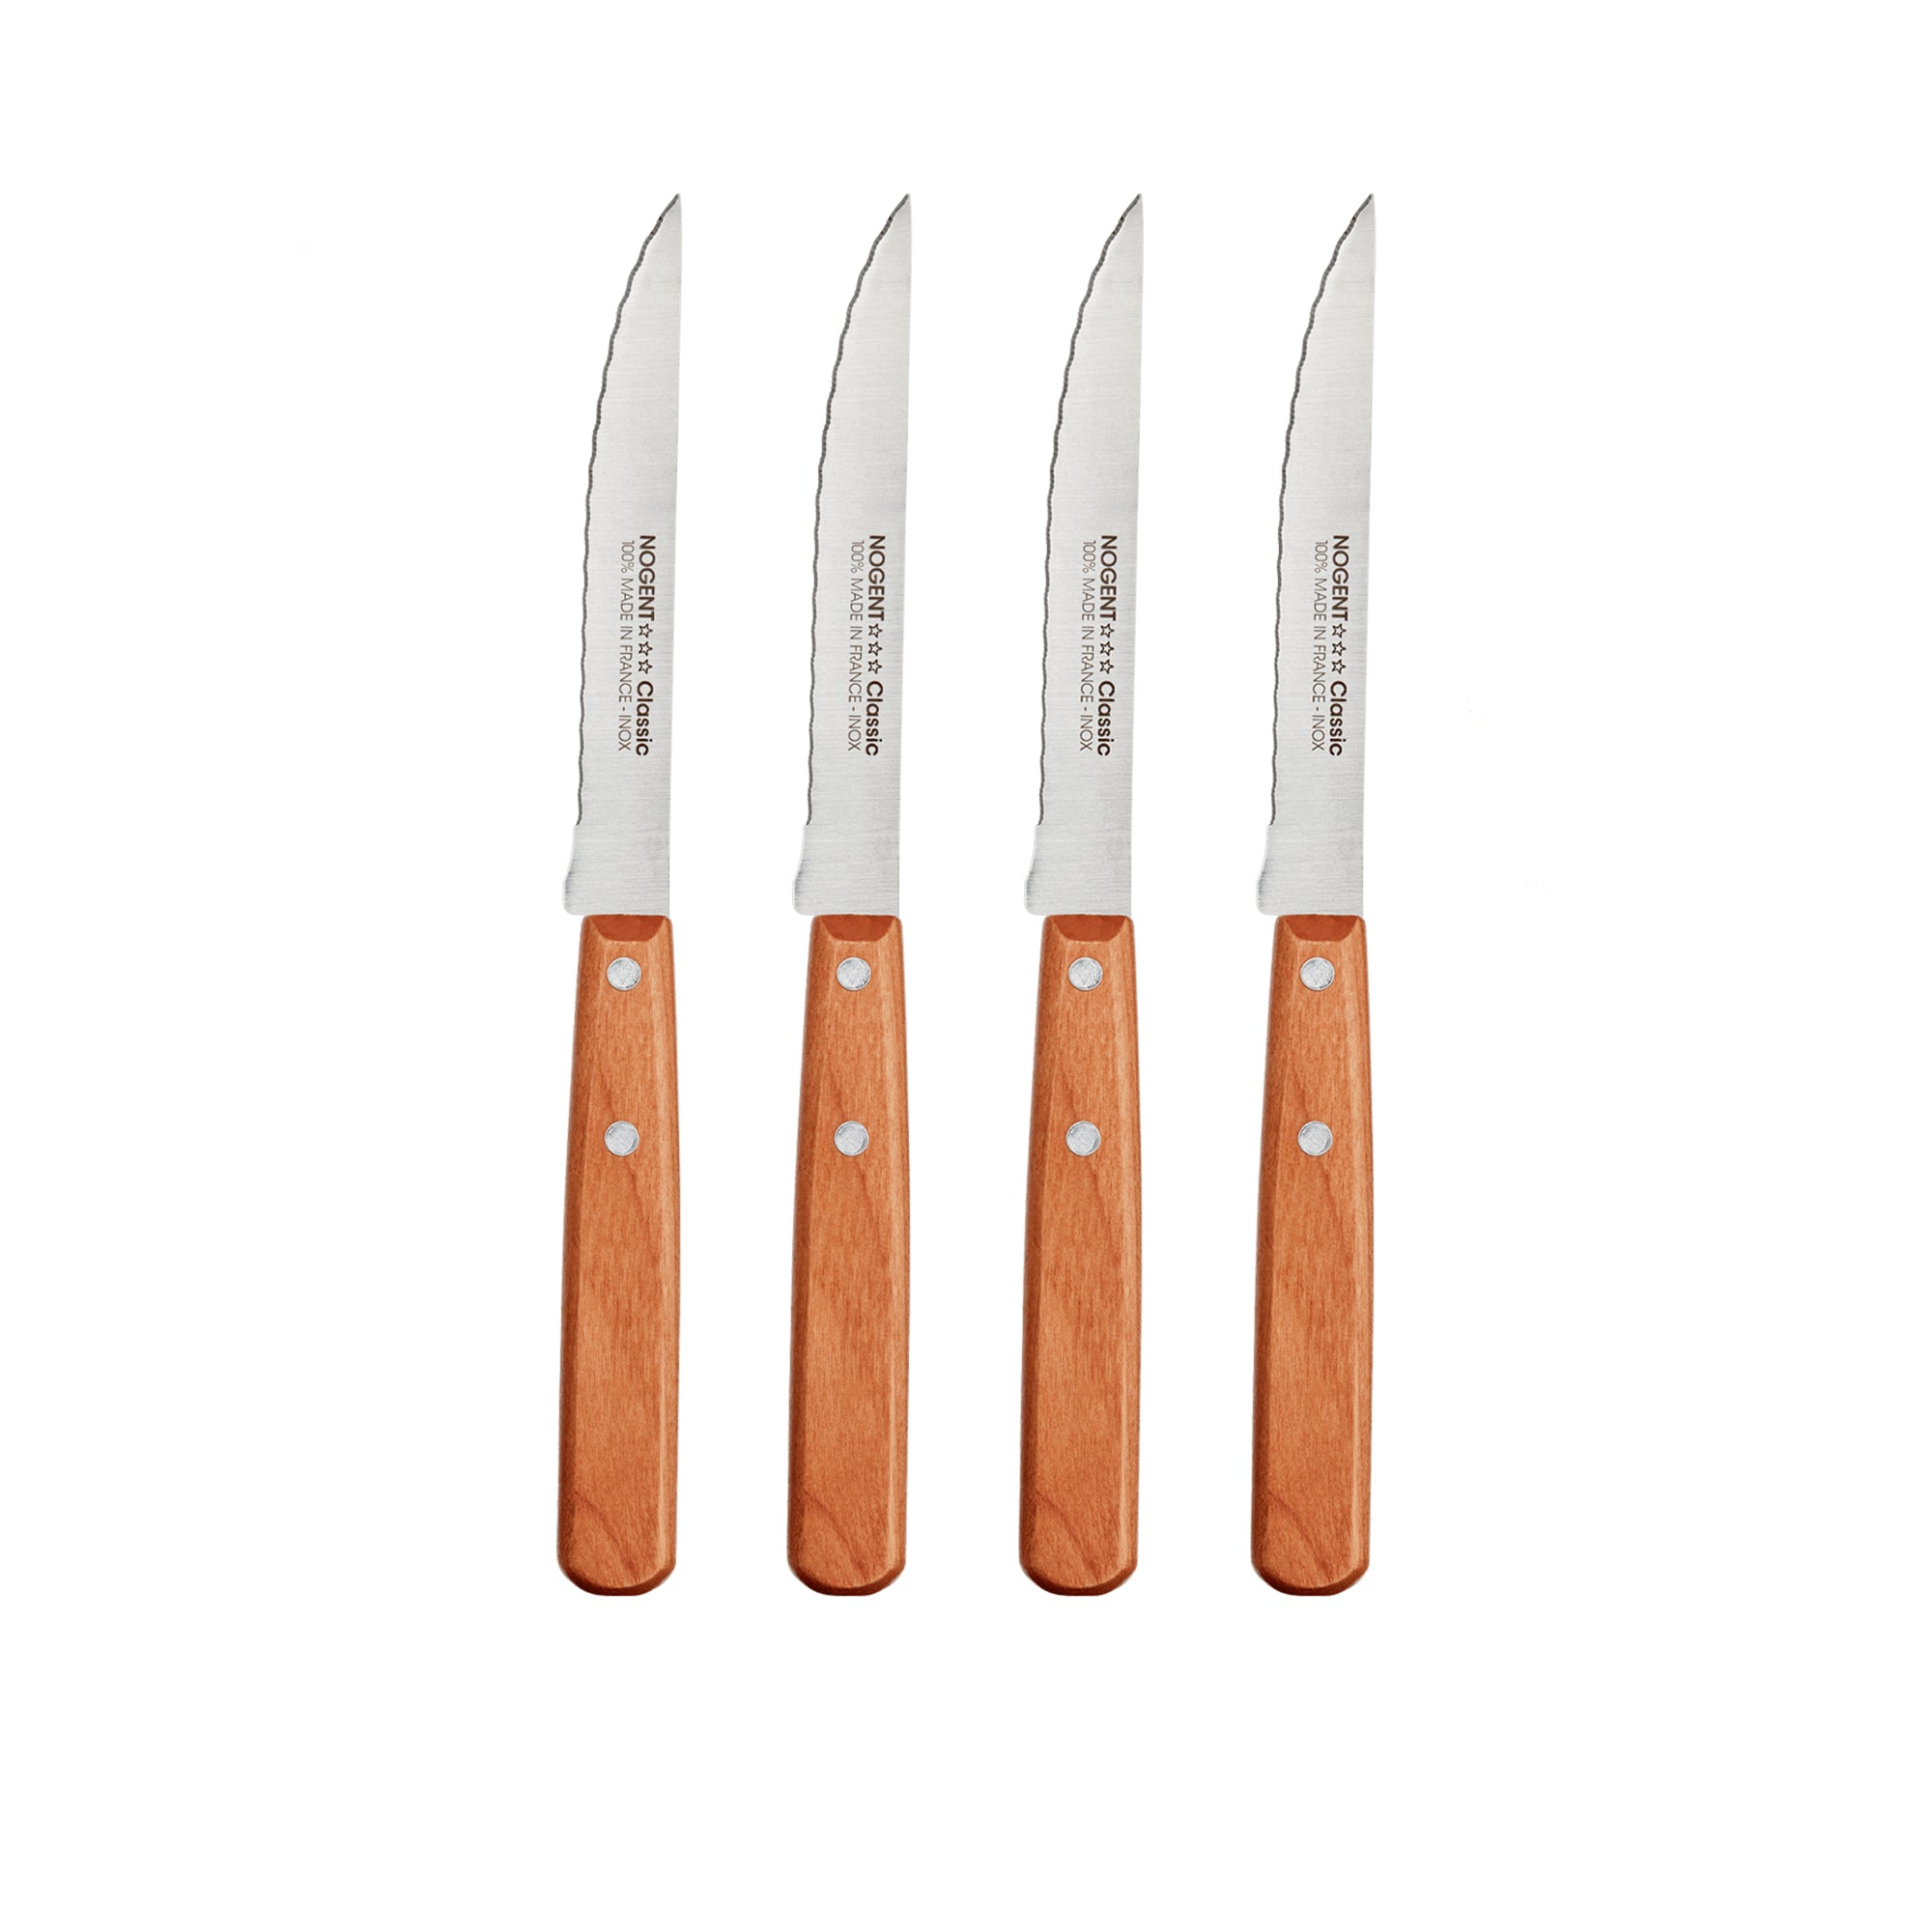 Cherrywood Steak Knives, Set of 4